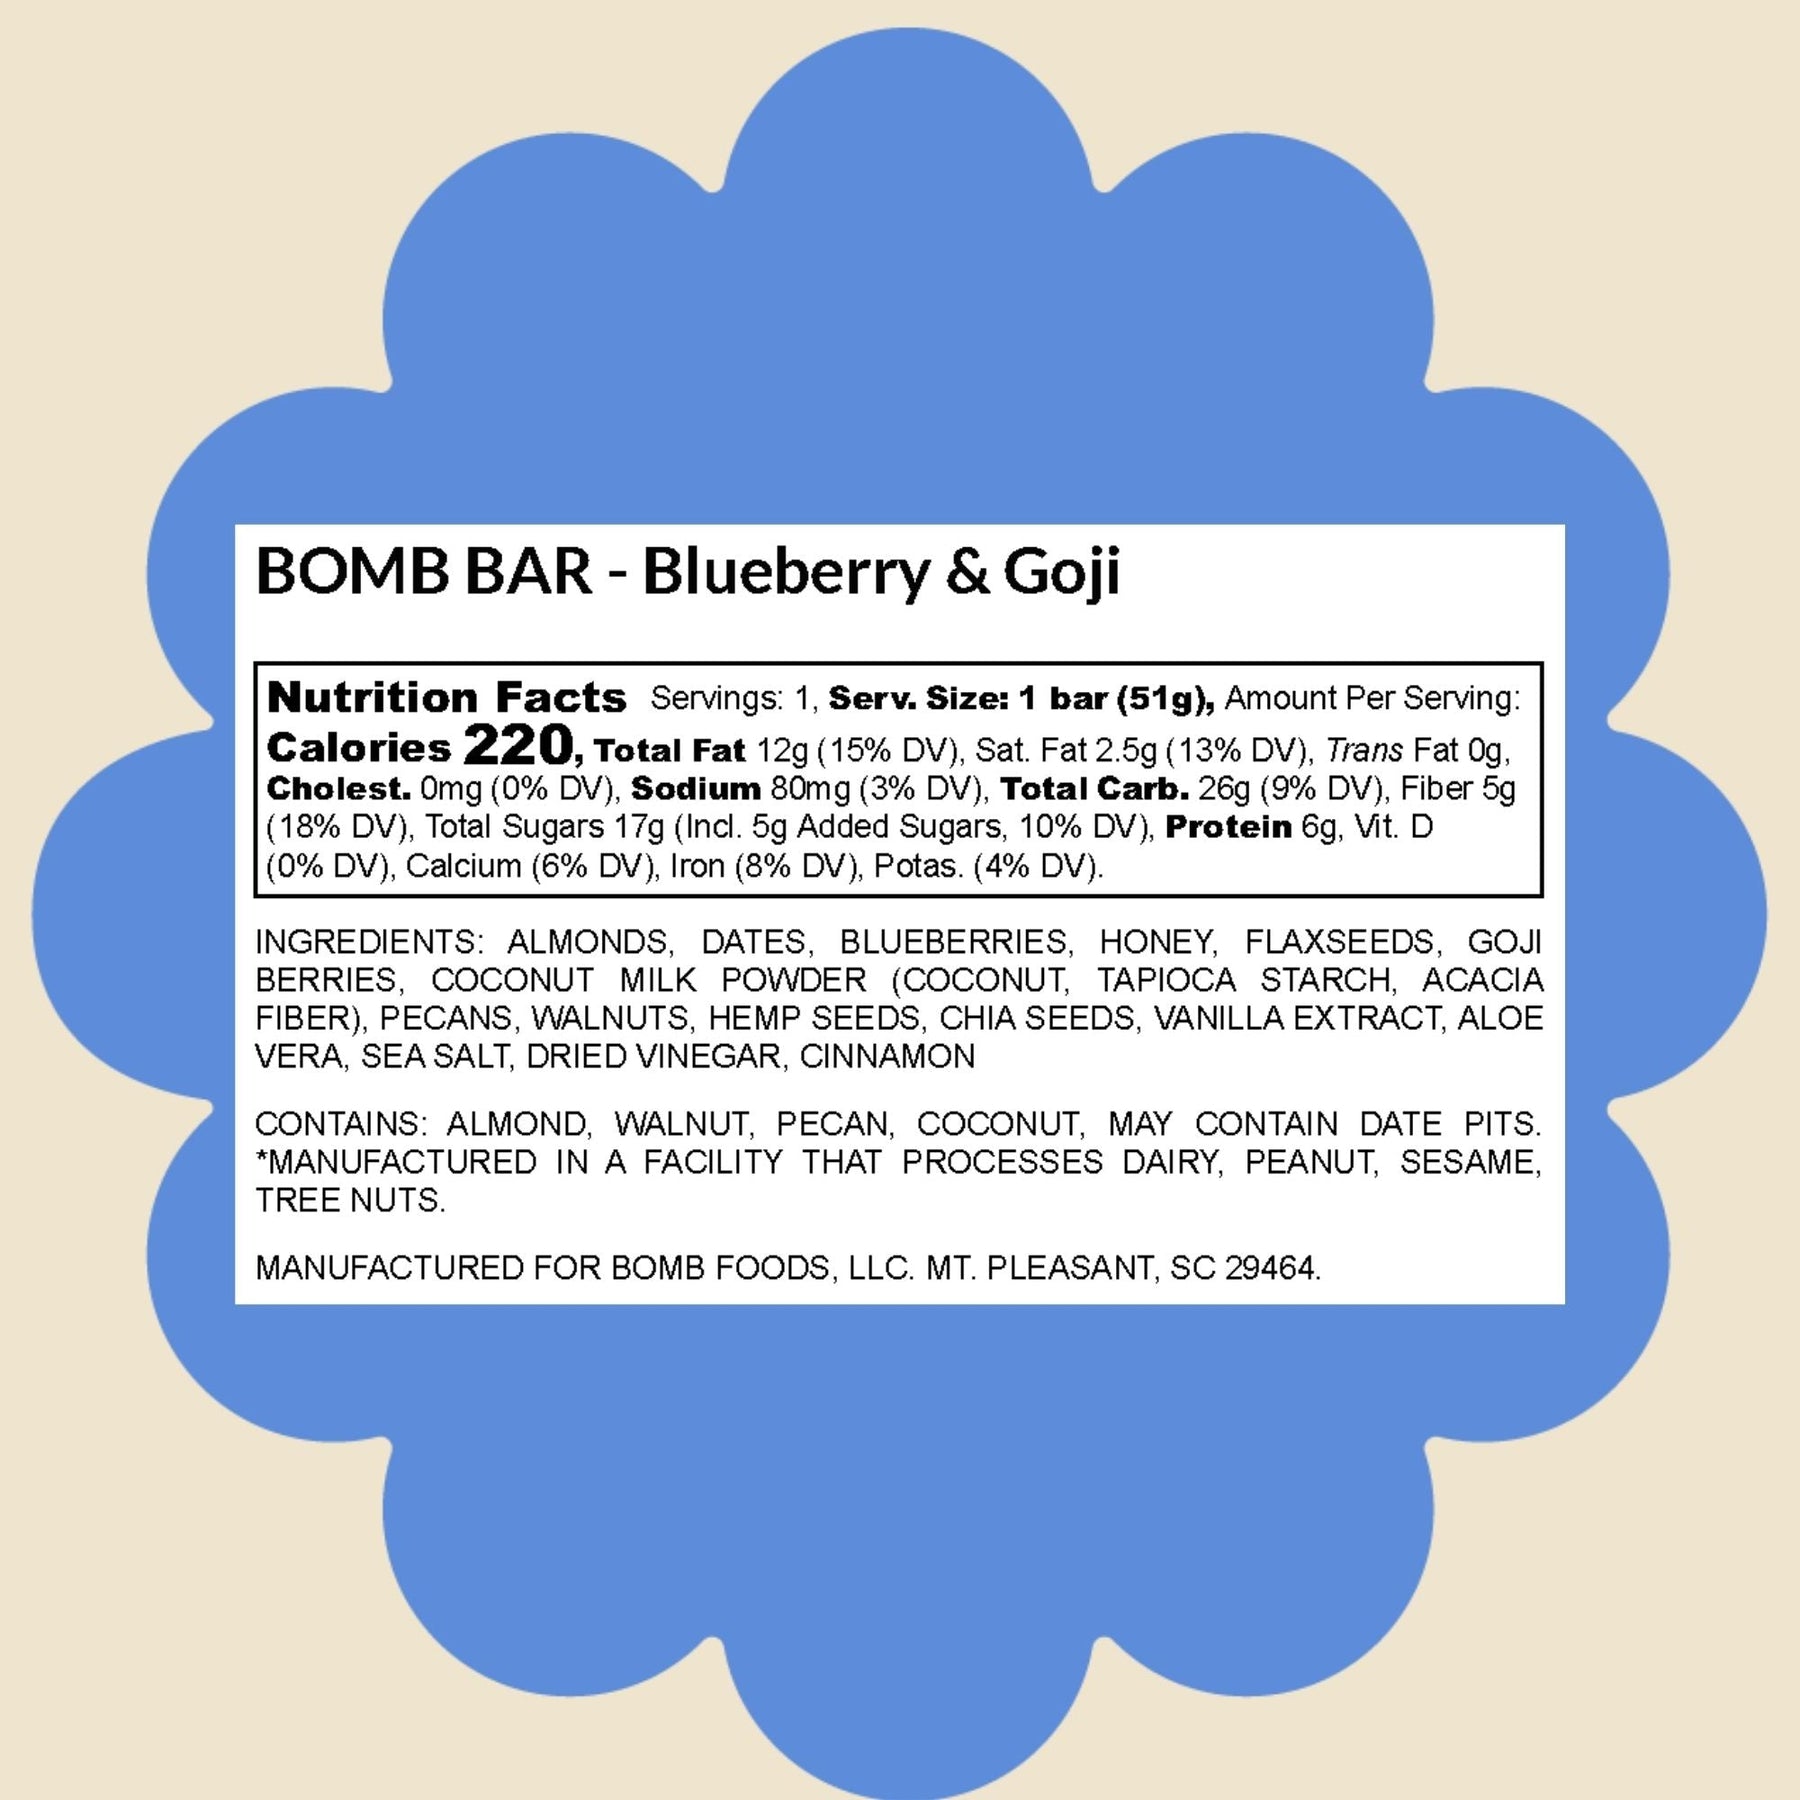 Blueberry & Goji Bomb Bar 9pk